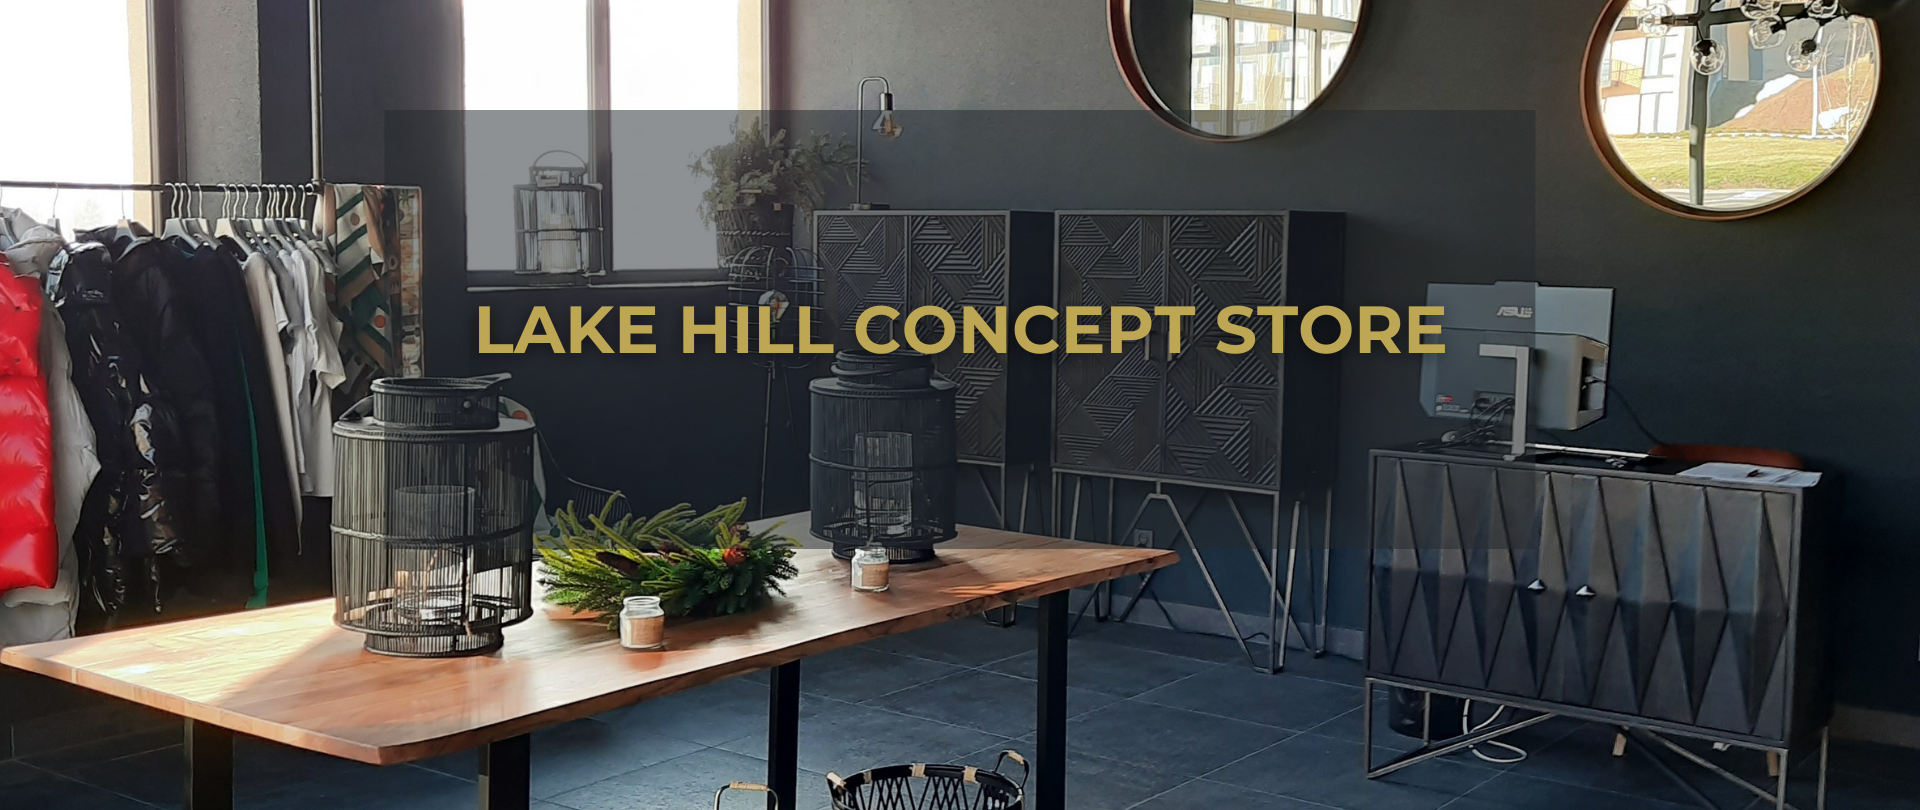 Lake Hill Concept Store